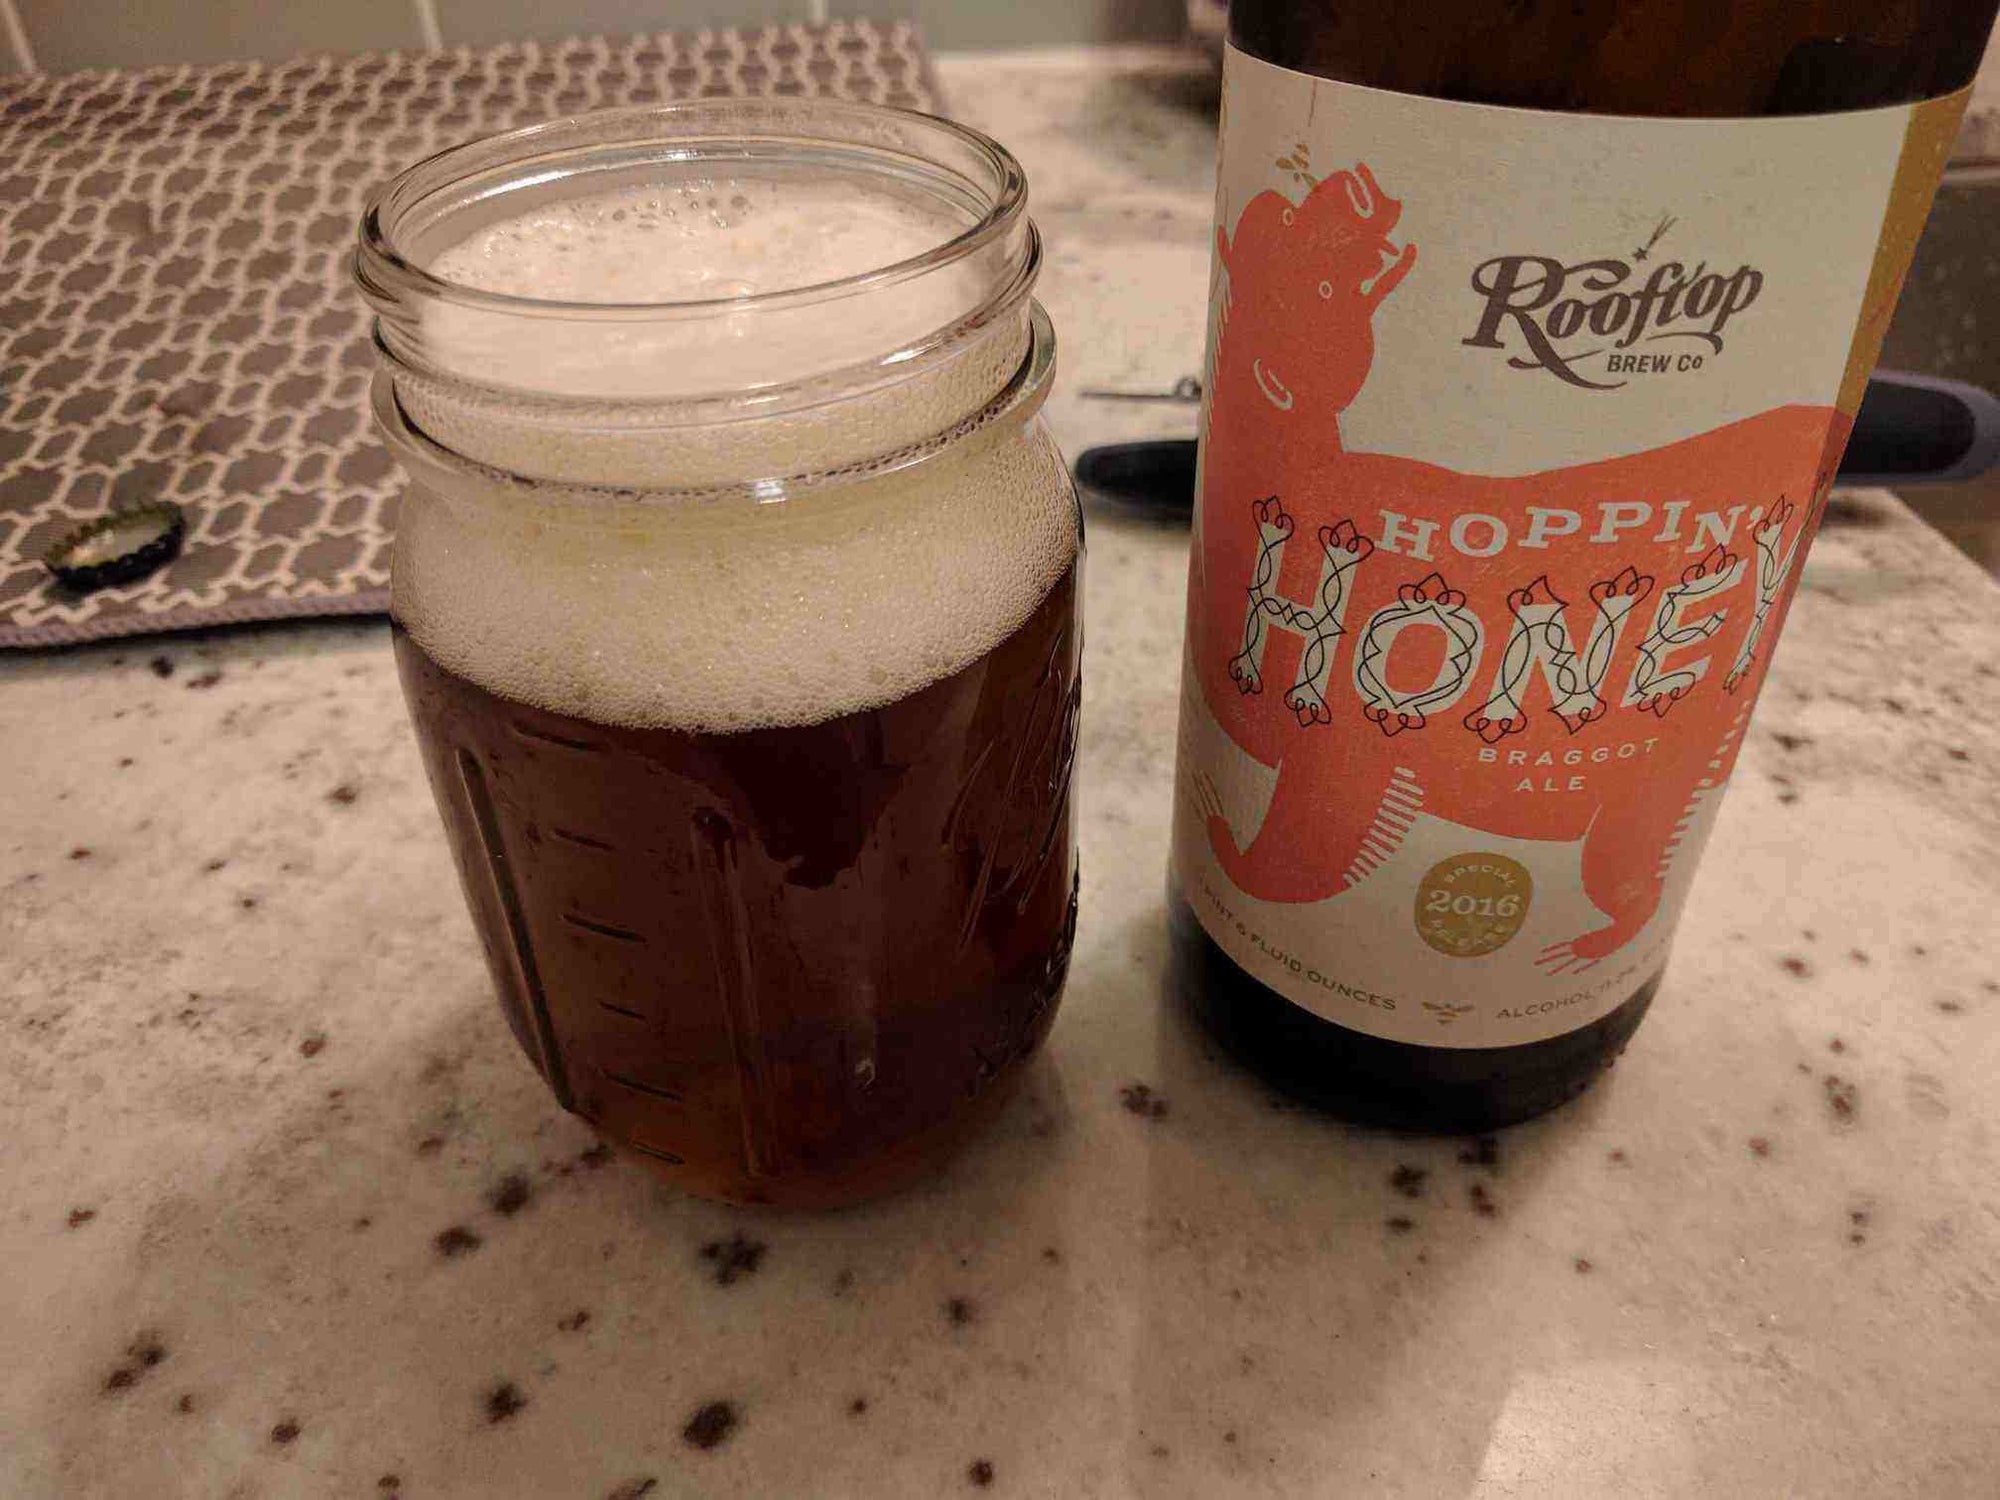 Rooftop Brewery Hoppin Honey Braggot Ale Review